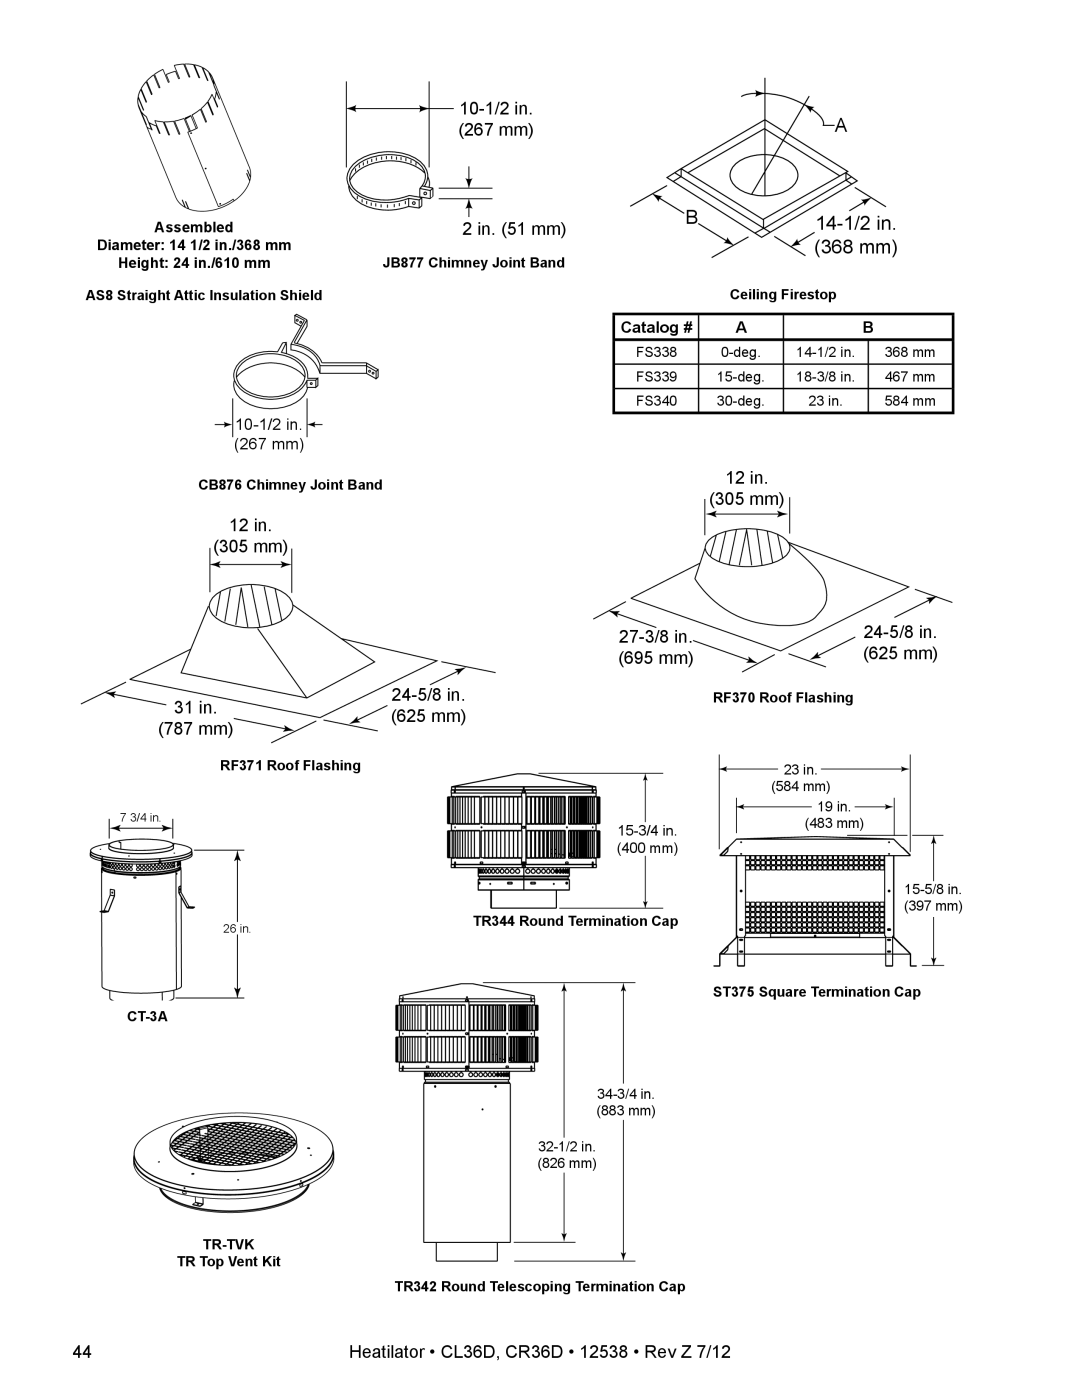 Heatiator CL36D owner manual 14-1/2in, 368 mm 